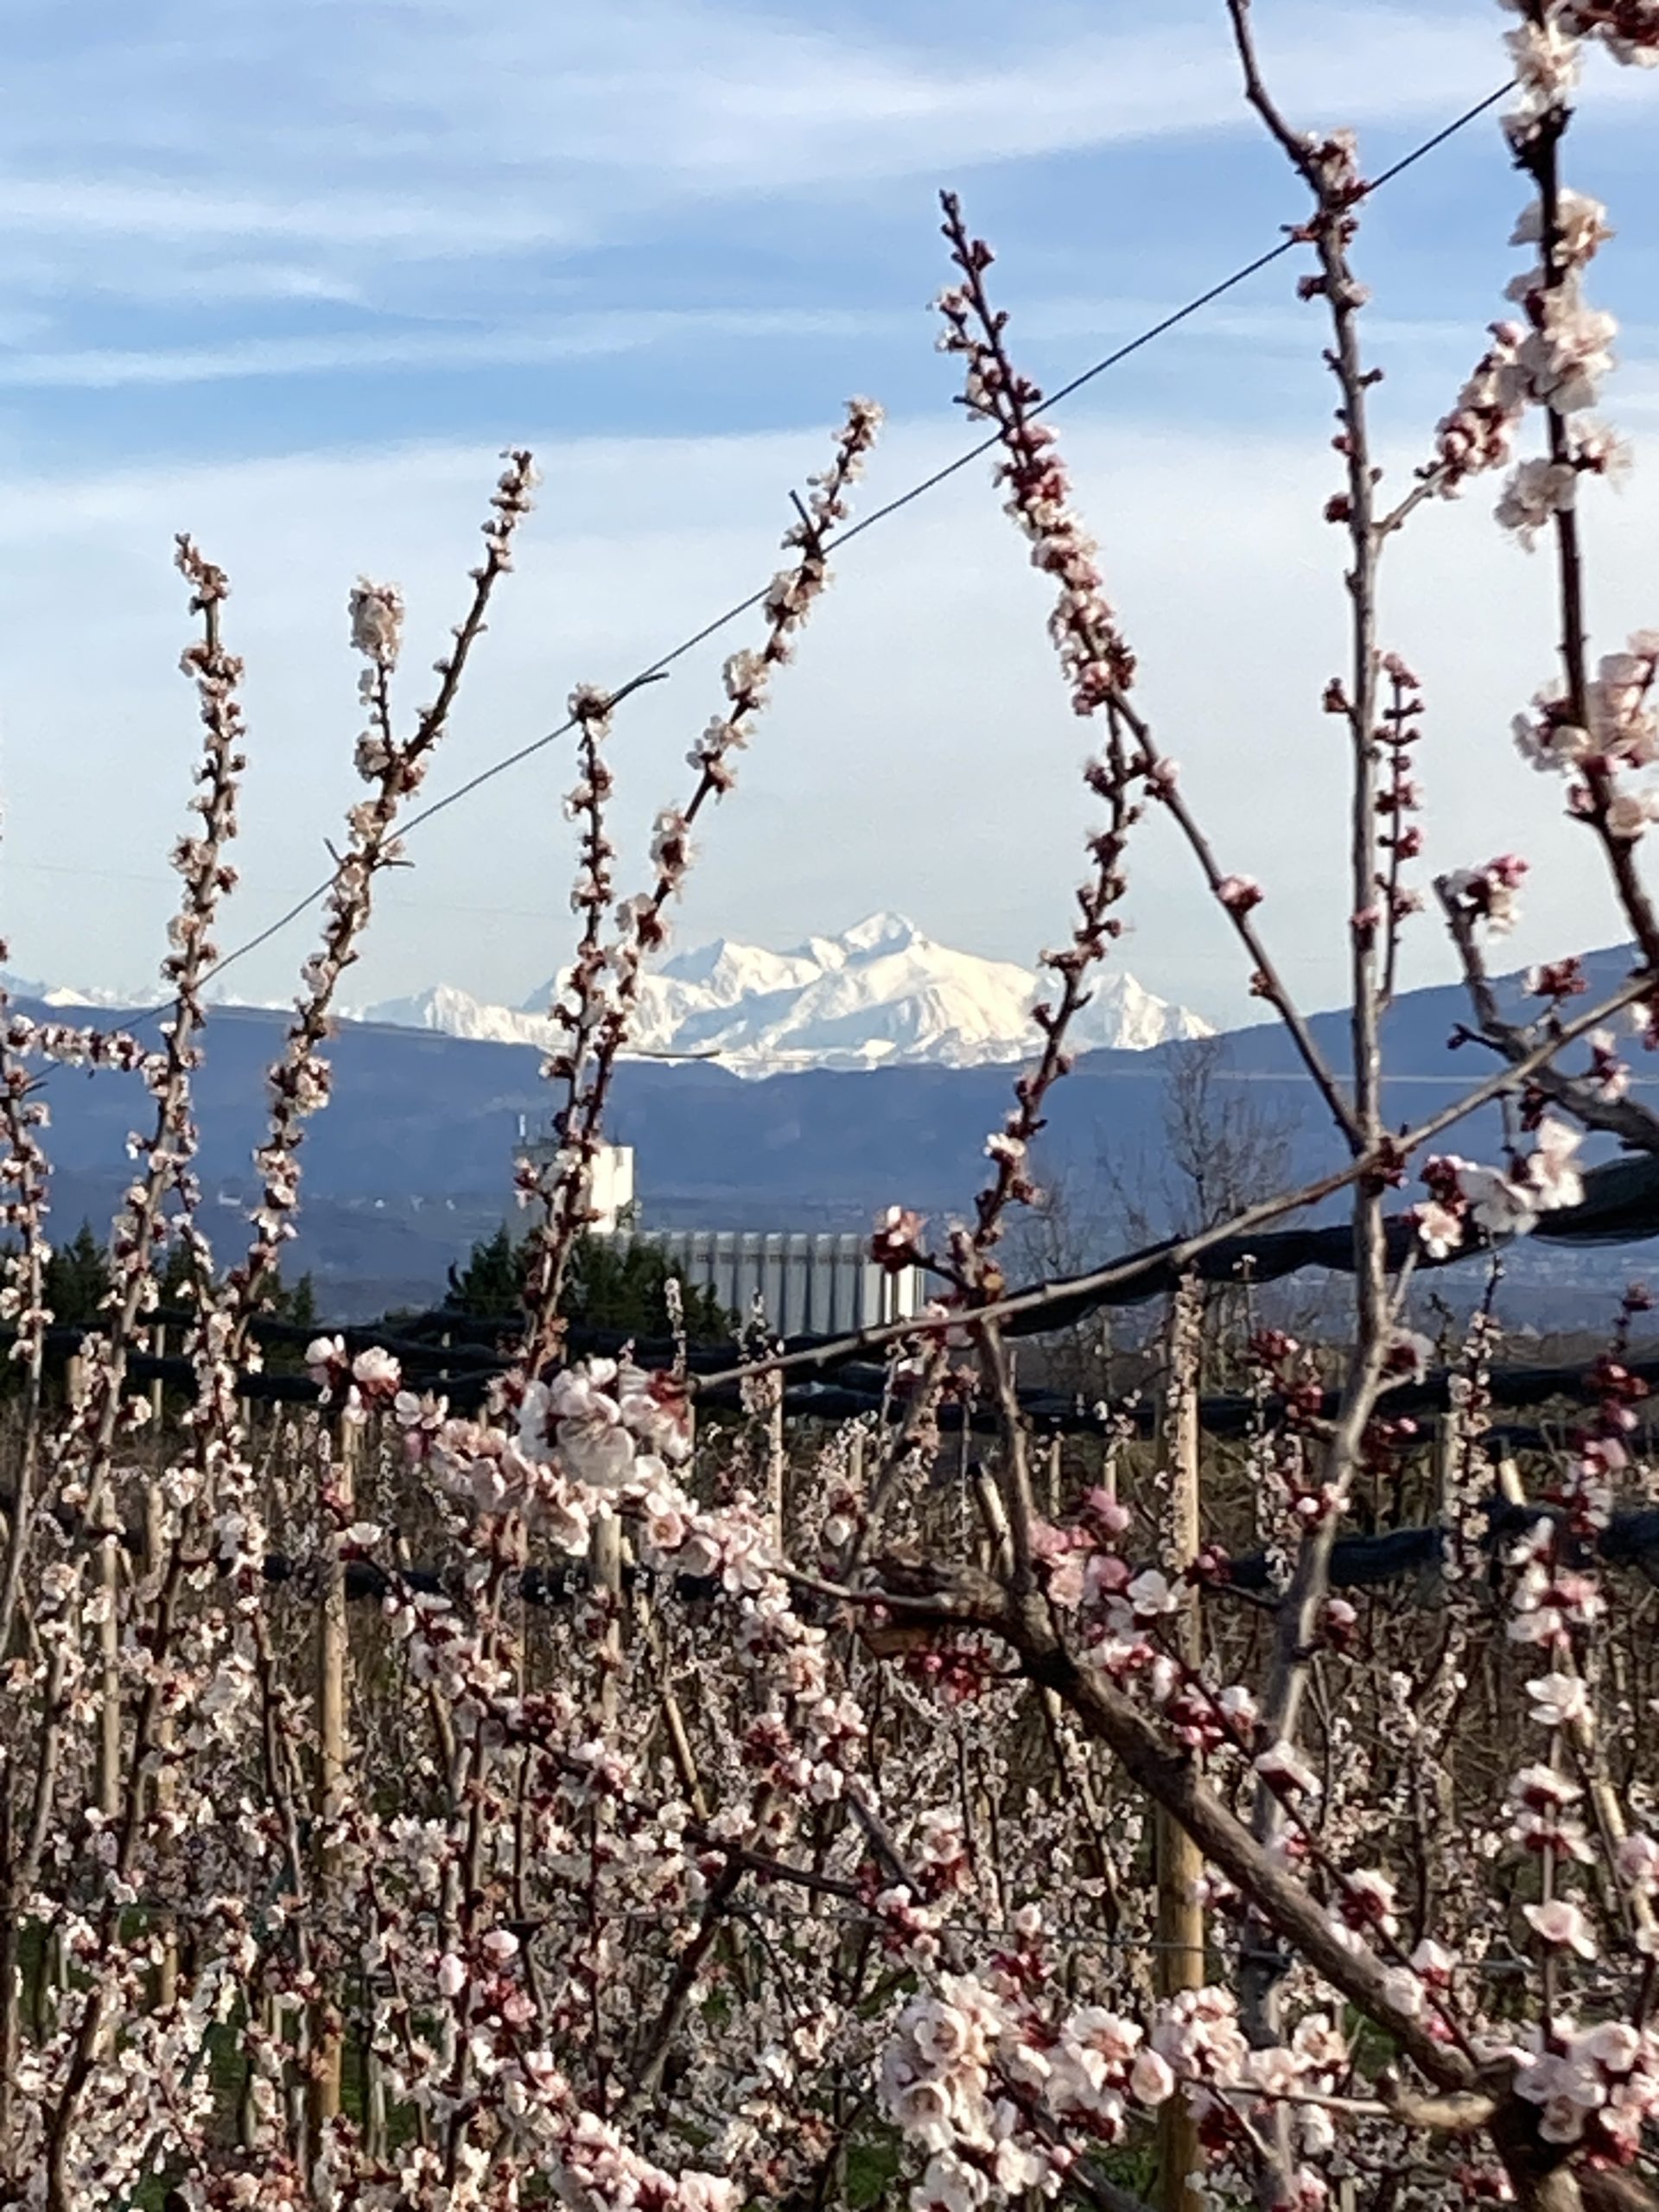 View of the Alps through Spring blossom